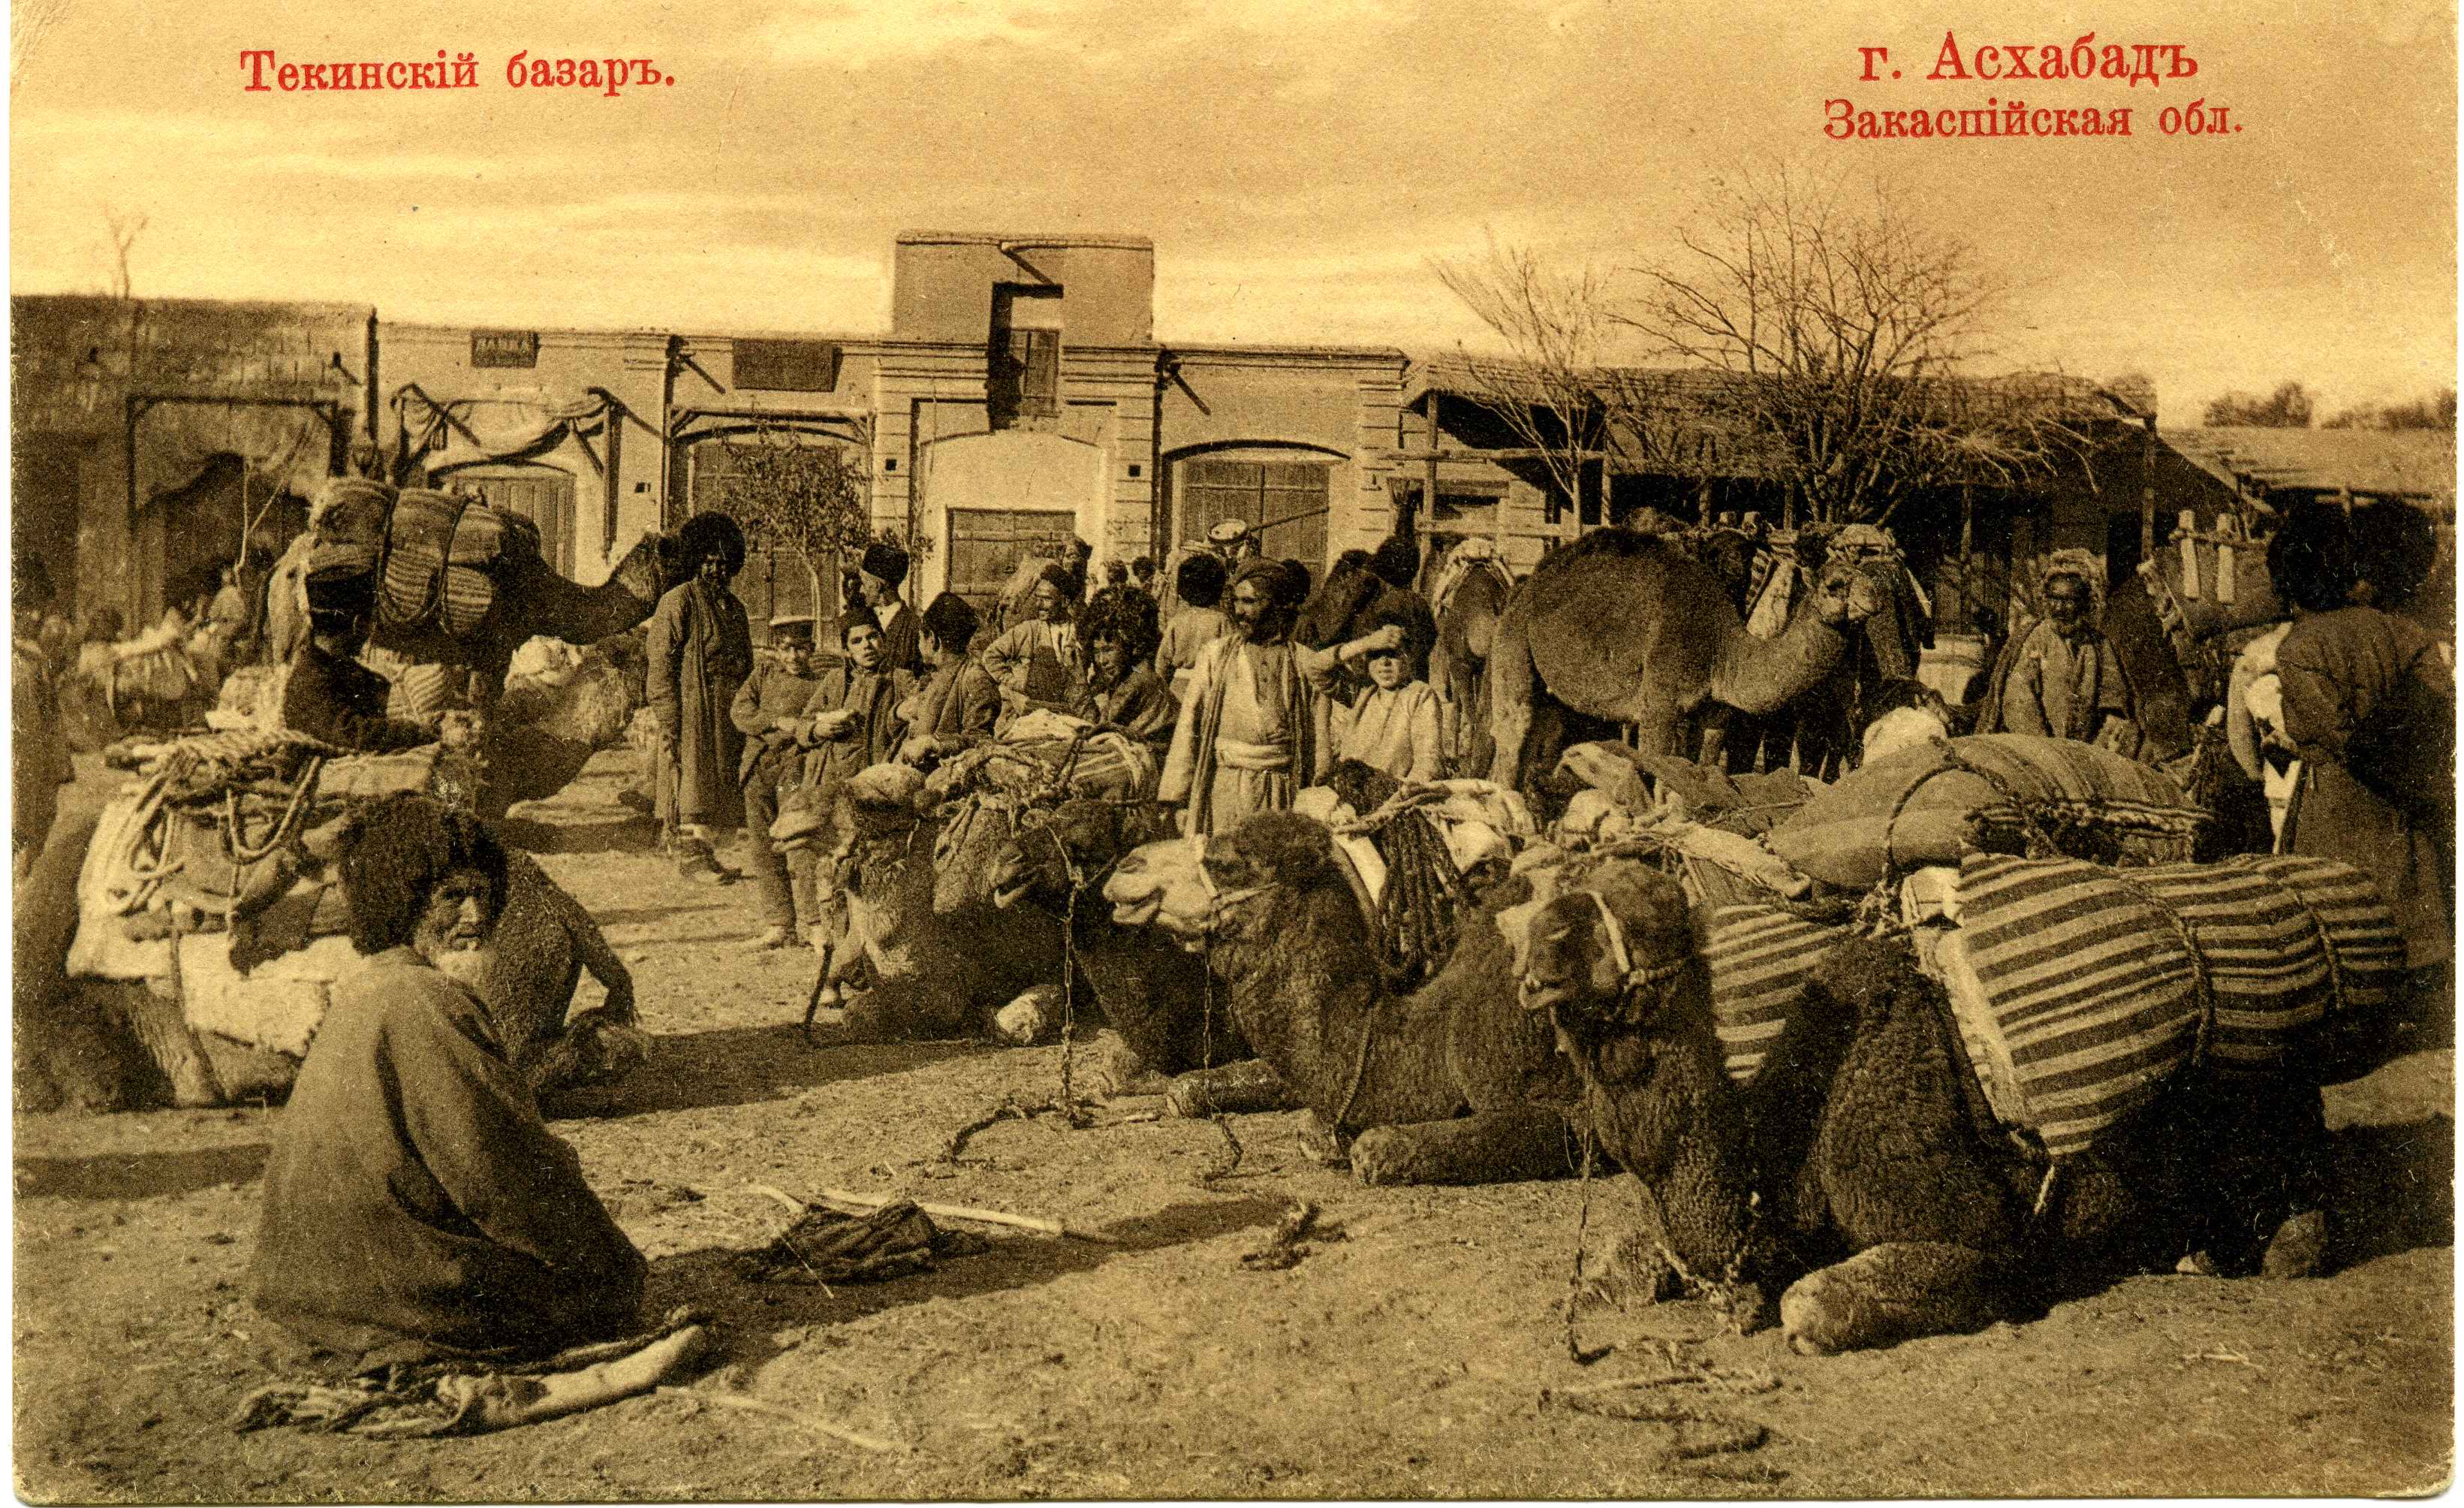 Старого каравана. Ашхабад текинский базар 19 век. Текинский базар в Ашхабаде. Туркестанский край 19 век. Туркмены 19 век.